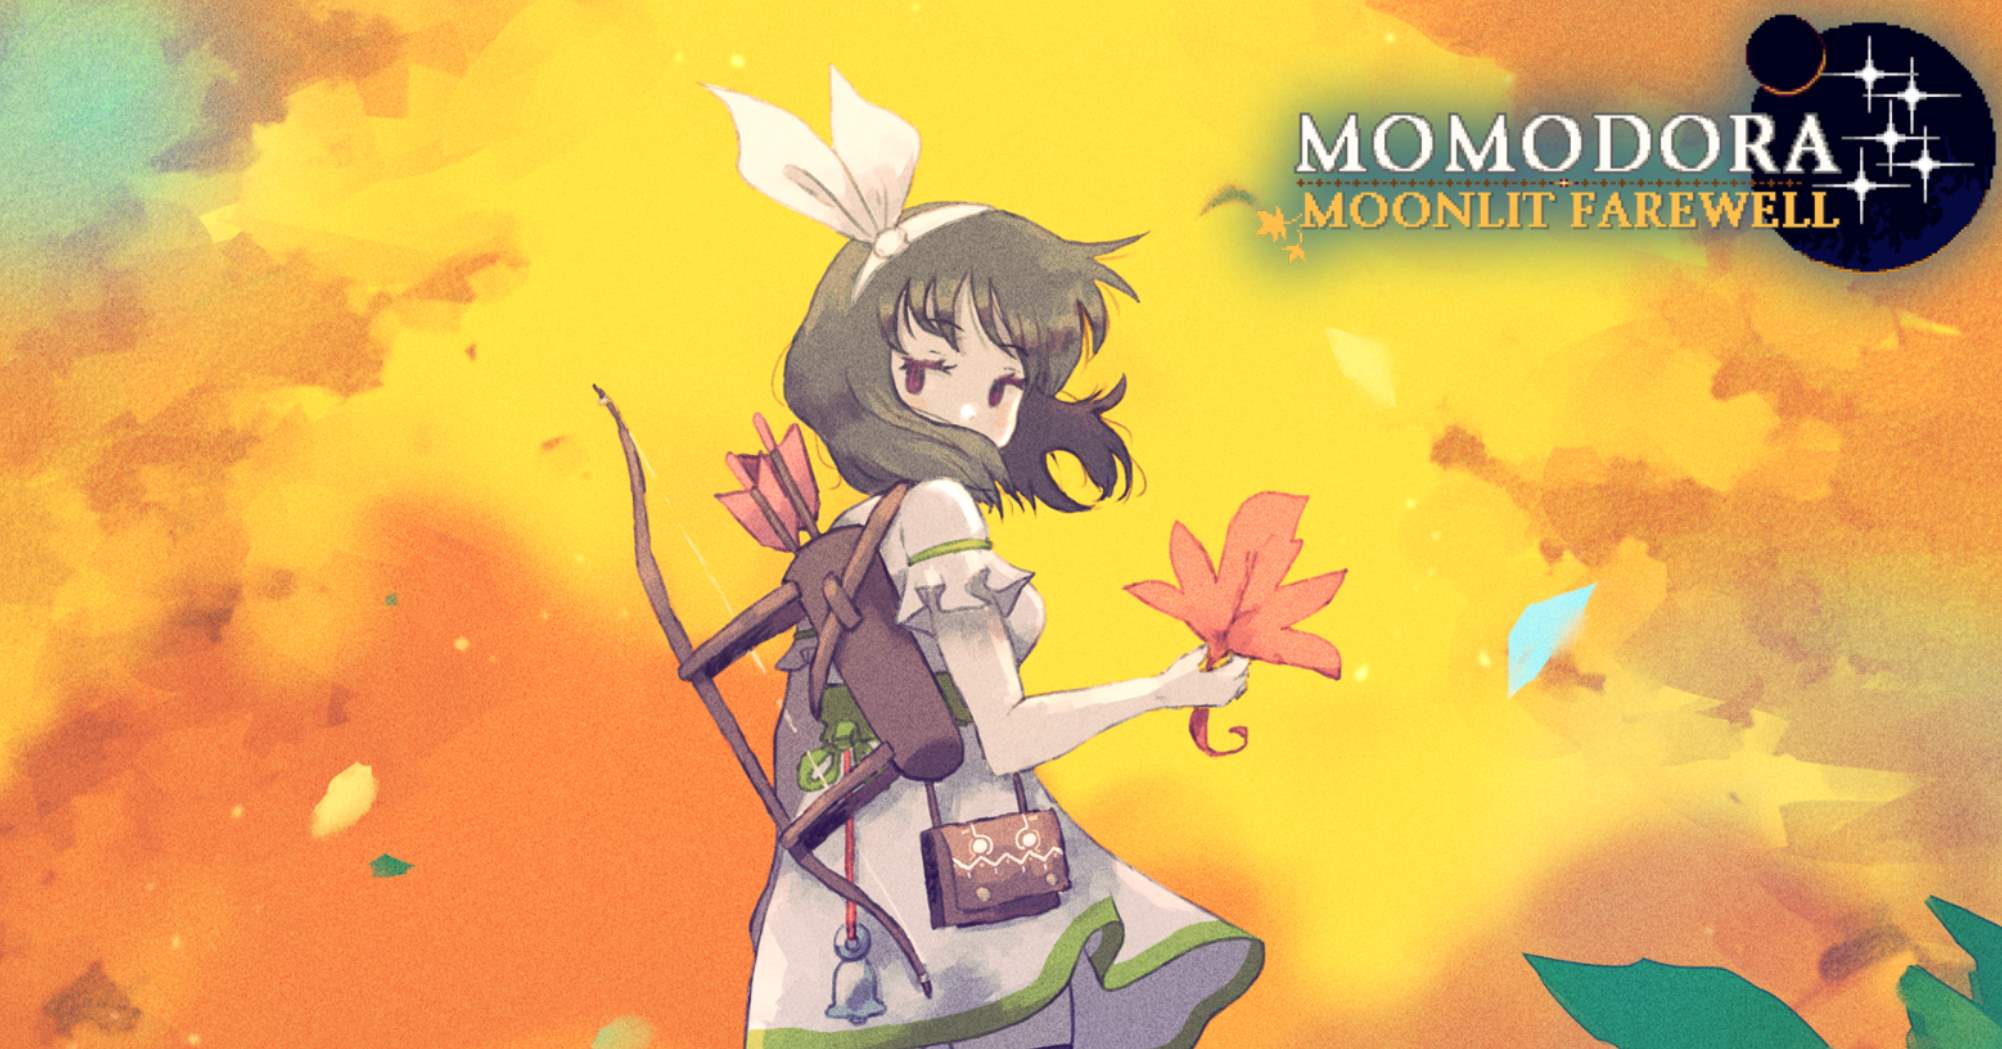 Momodora: Moonlit Farewell uscirà l